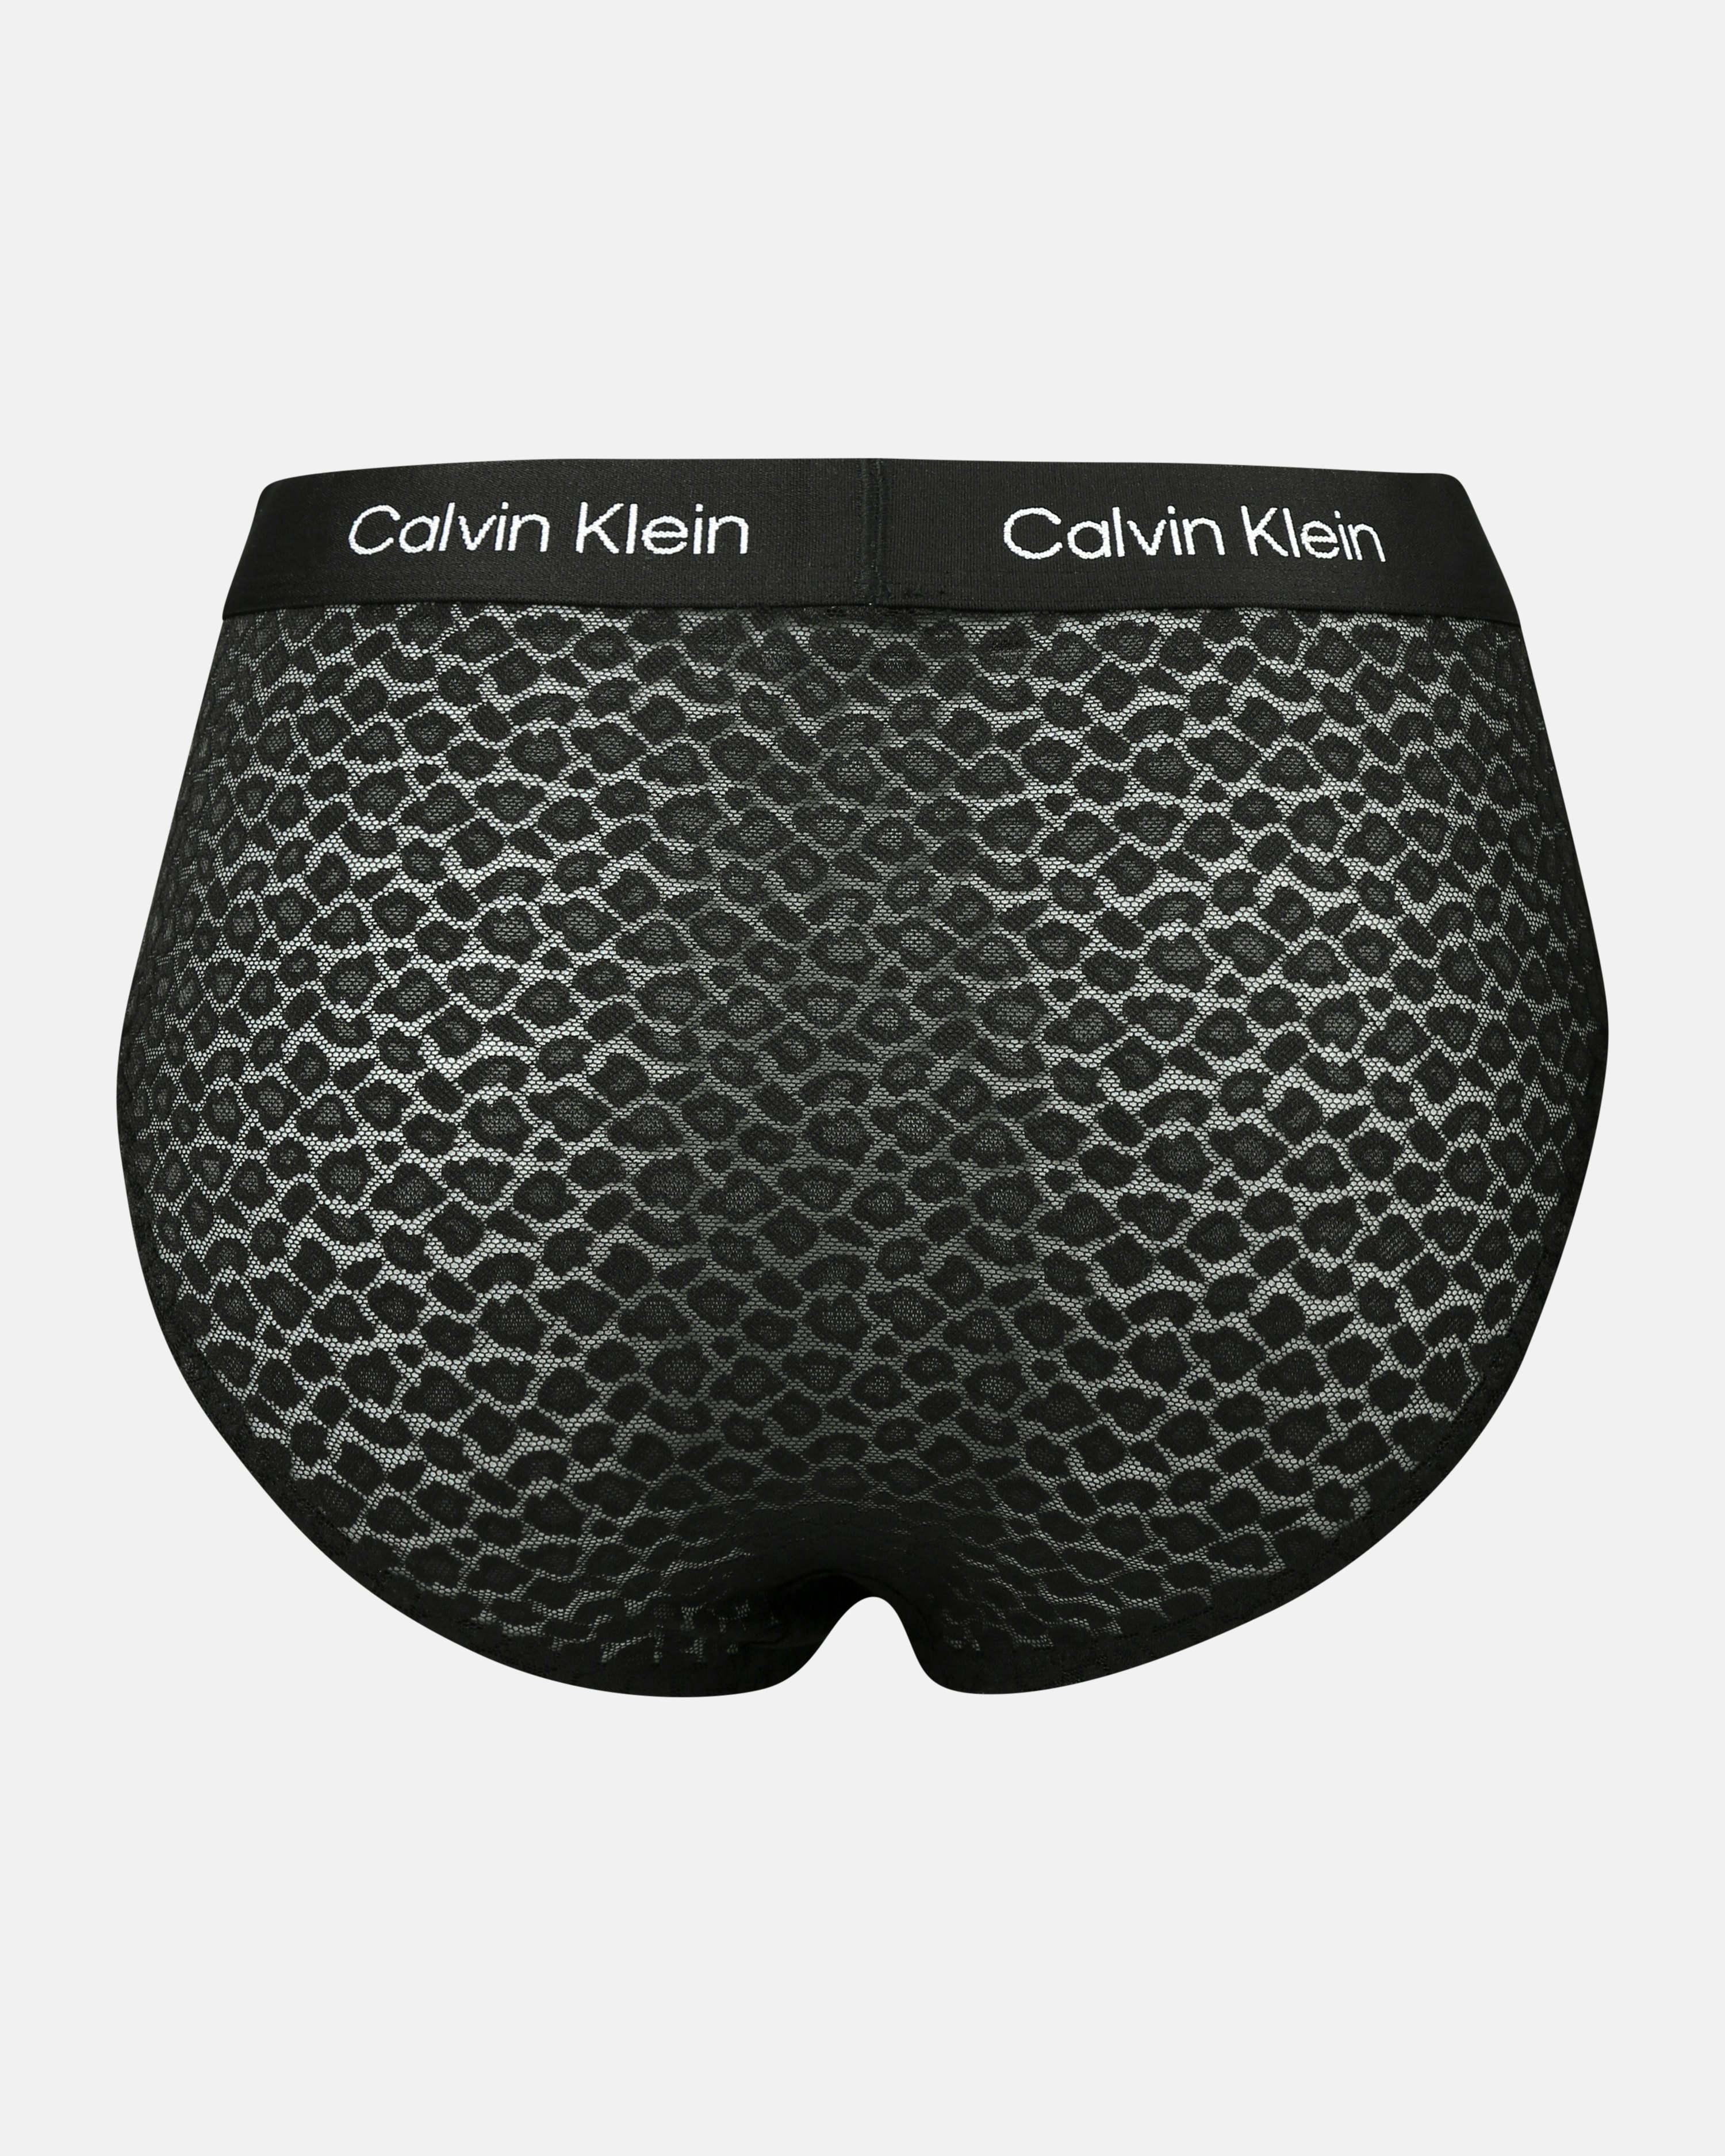 Calvin Klein Underwear Panties - Carousel Brazilian Briefs Black